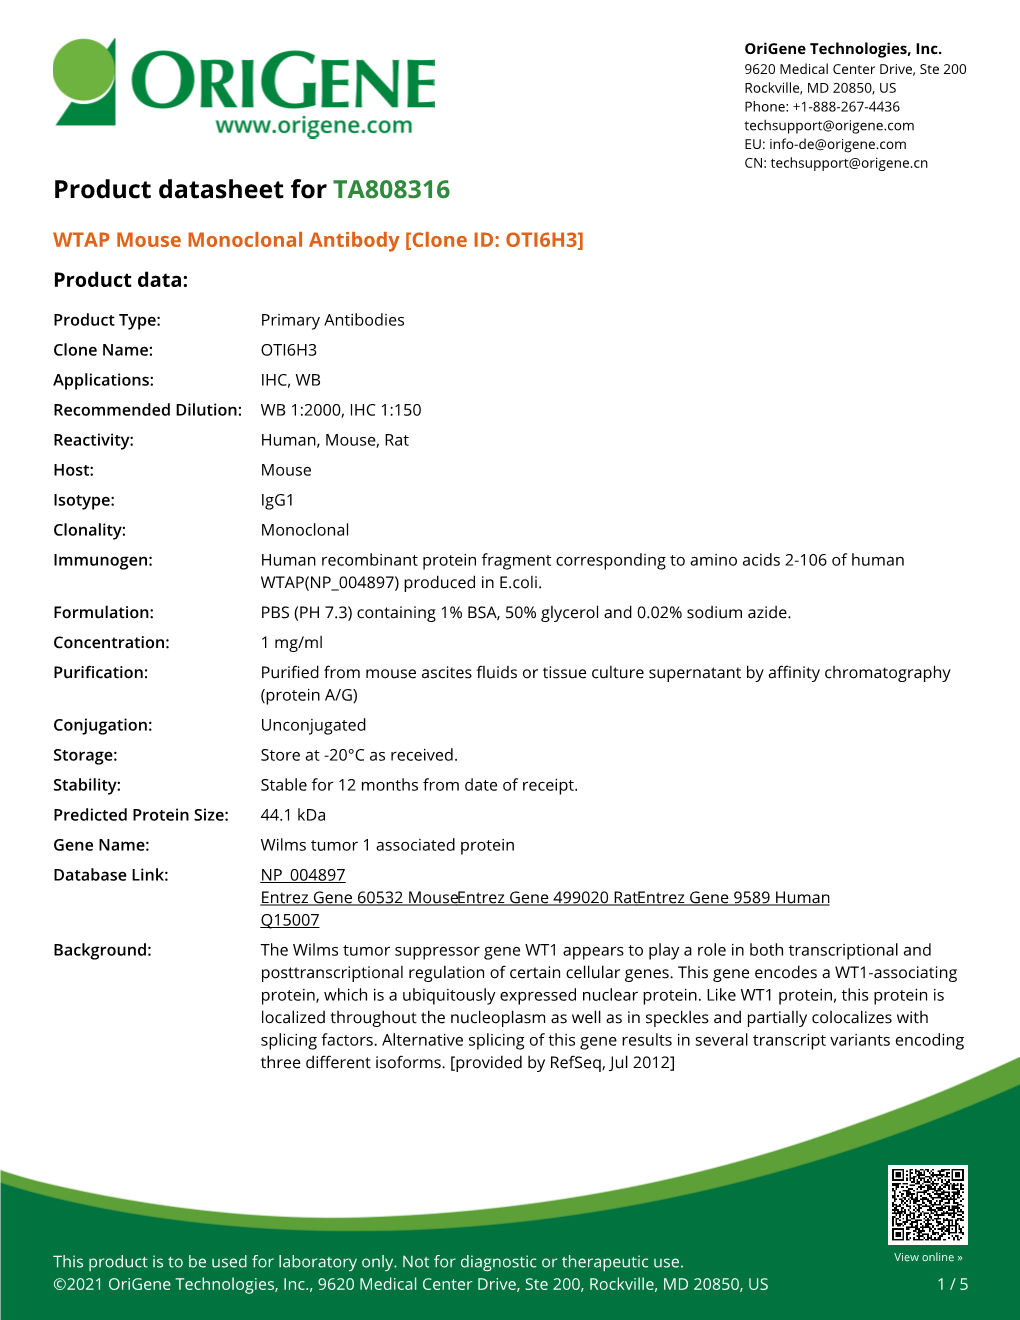 WTAP Mouse Monoclonal Antibody [Clone ID: OTI6H3] Product Data